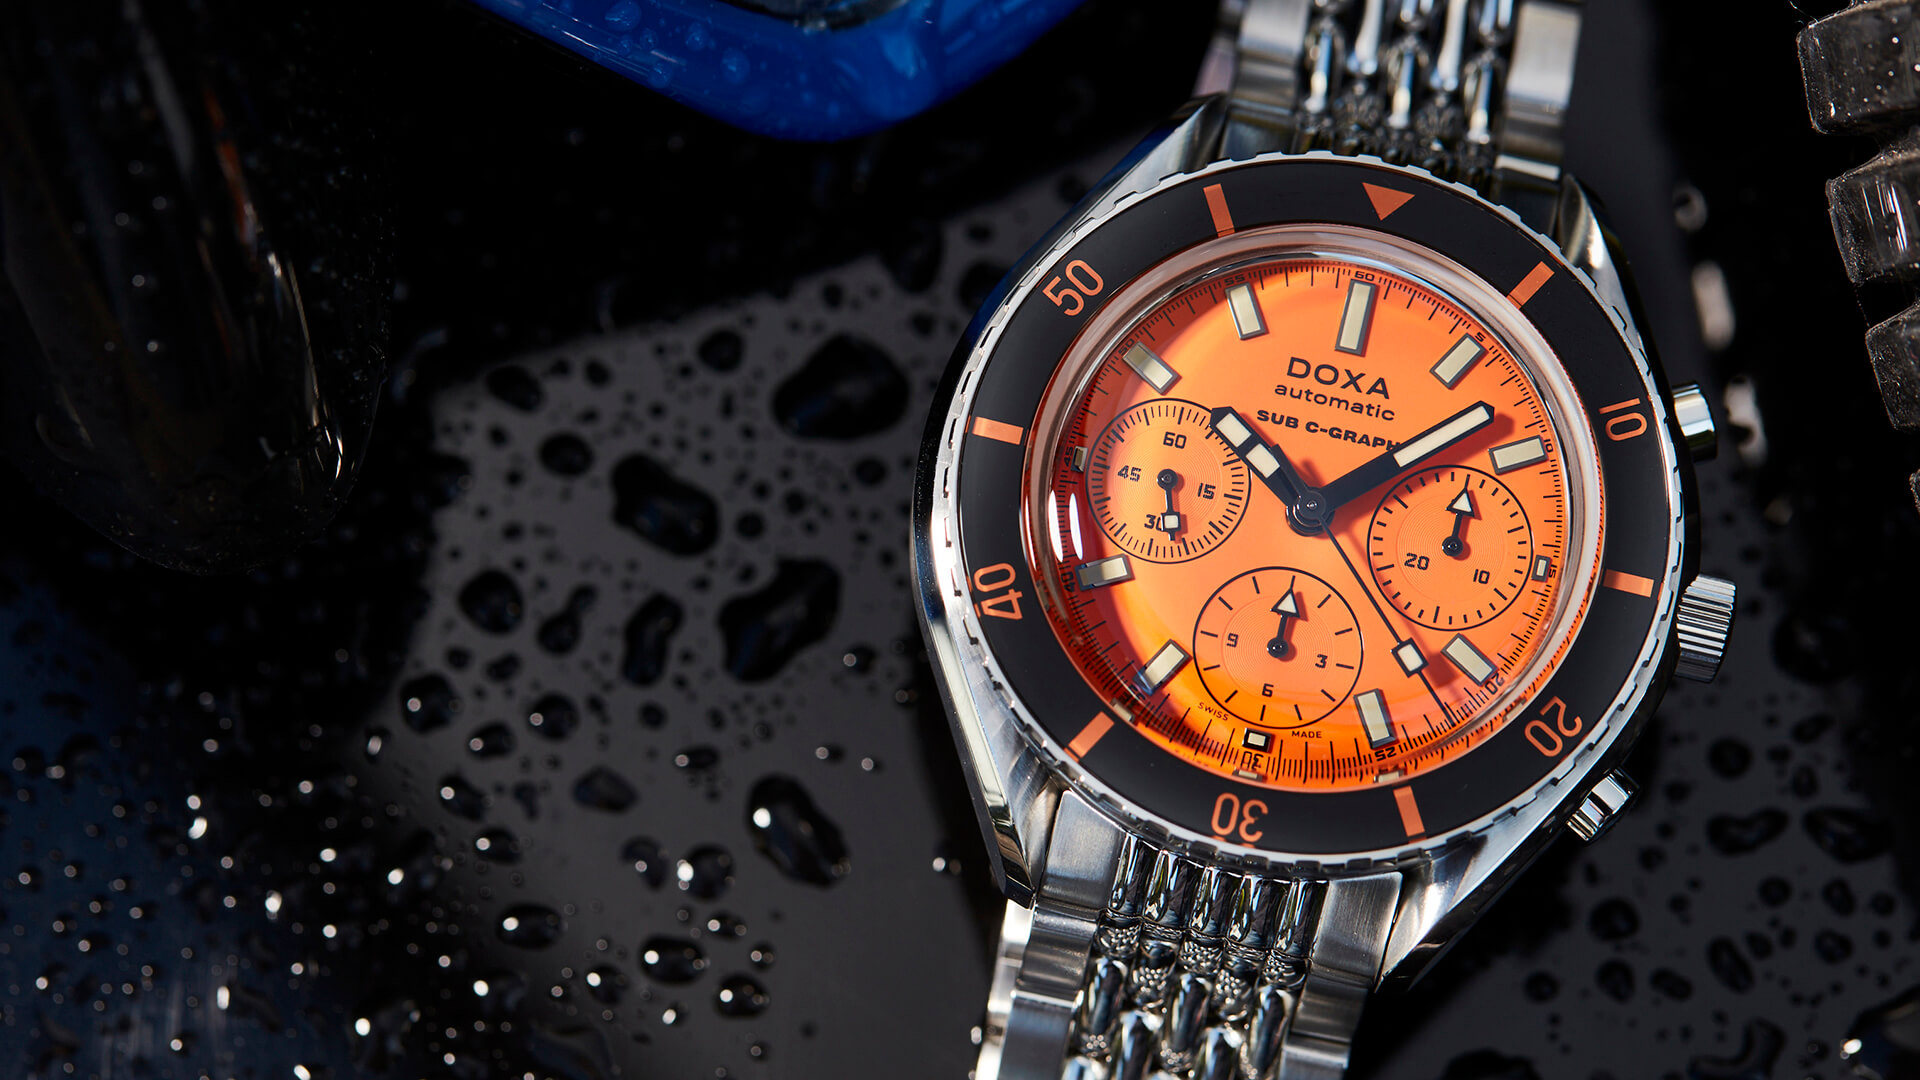 Doxa Debuts Sub 200 C-Graph Watch Series